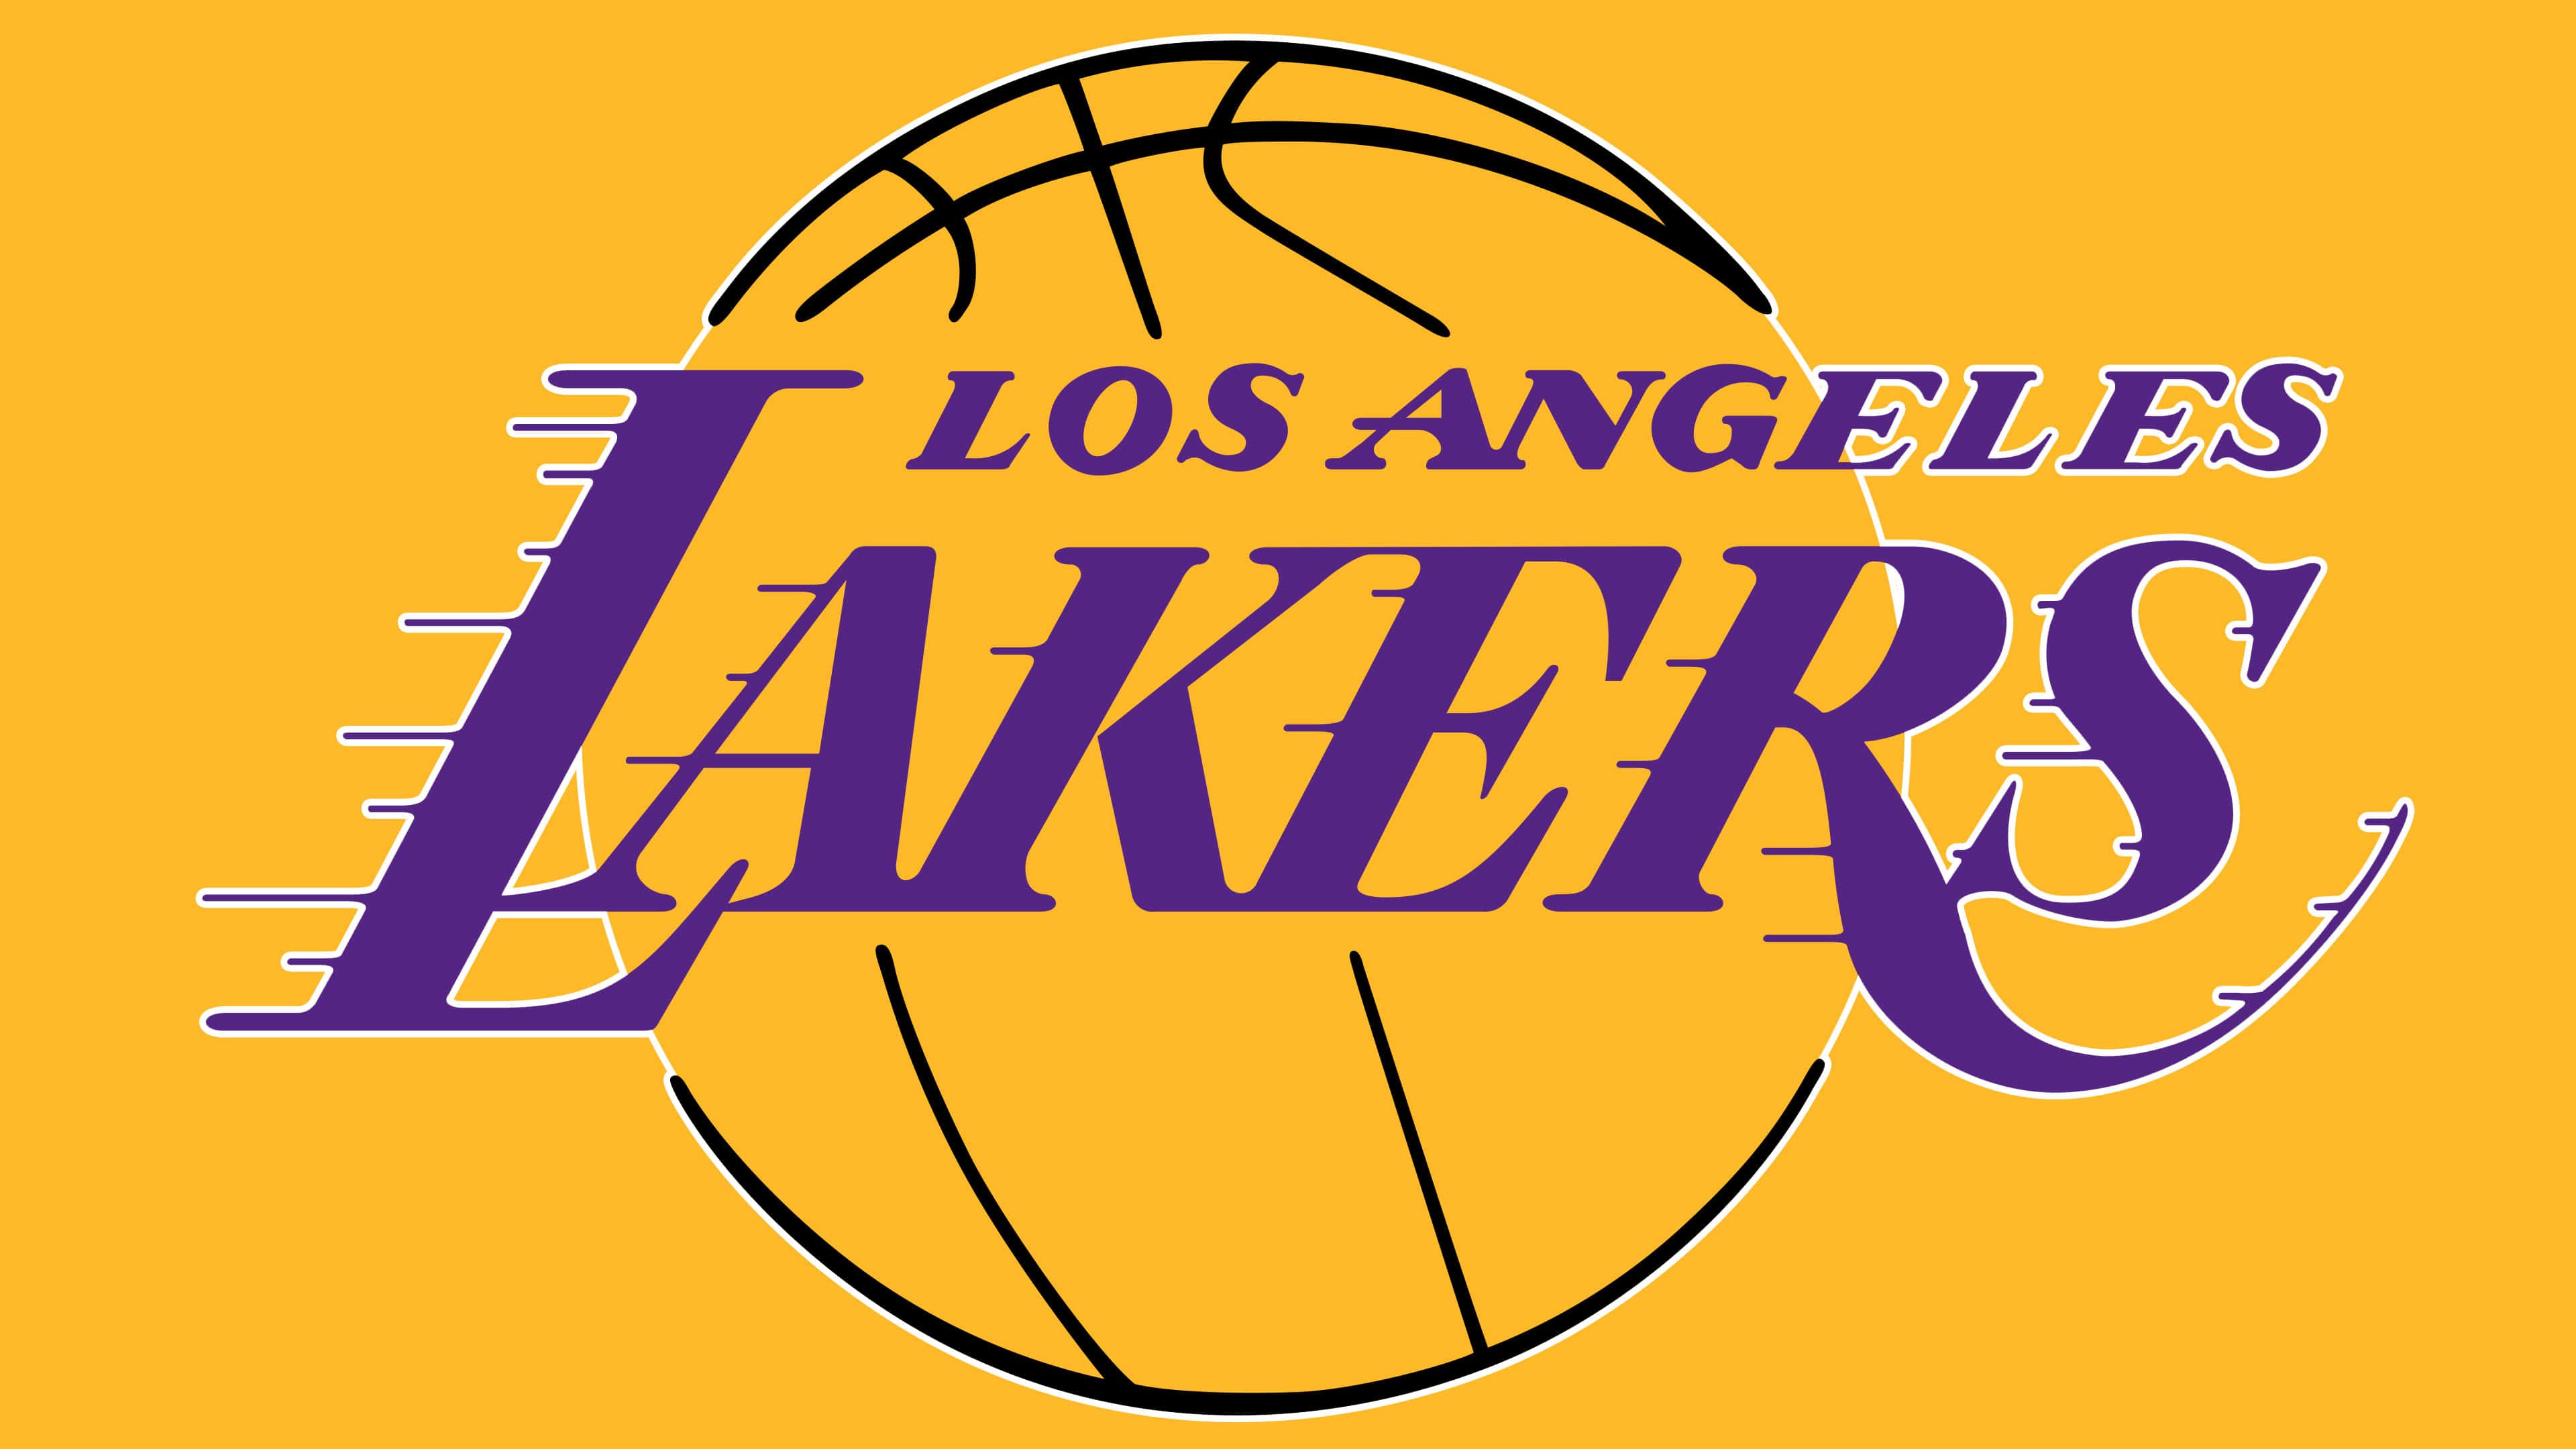 Los Angeles Lakers Logos.